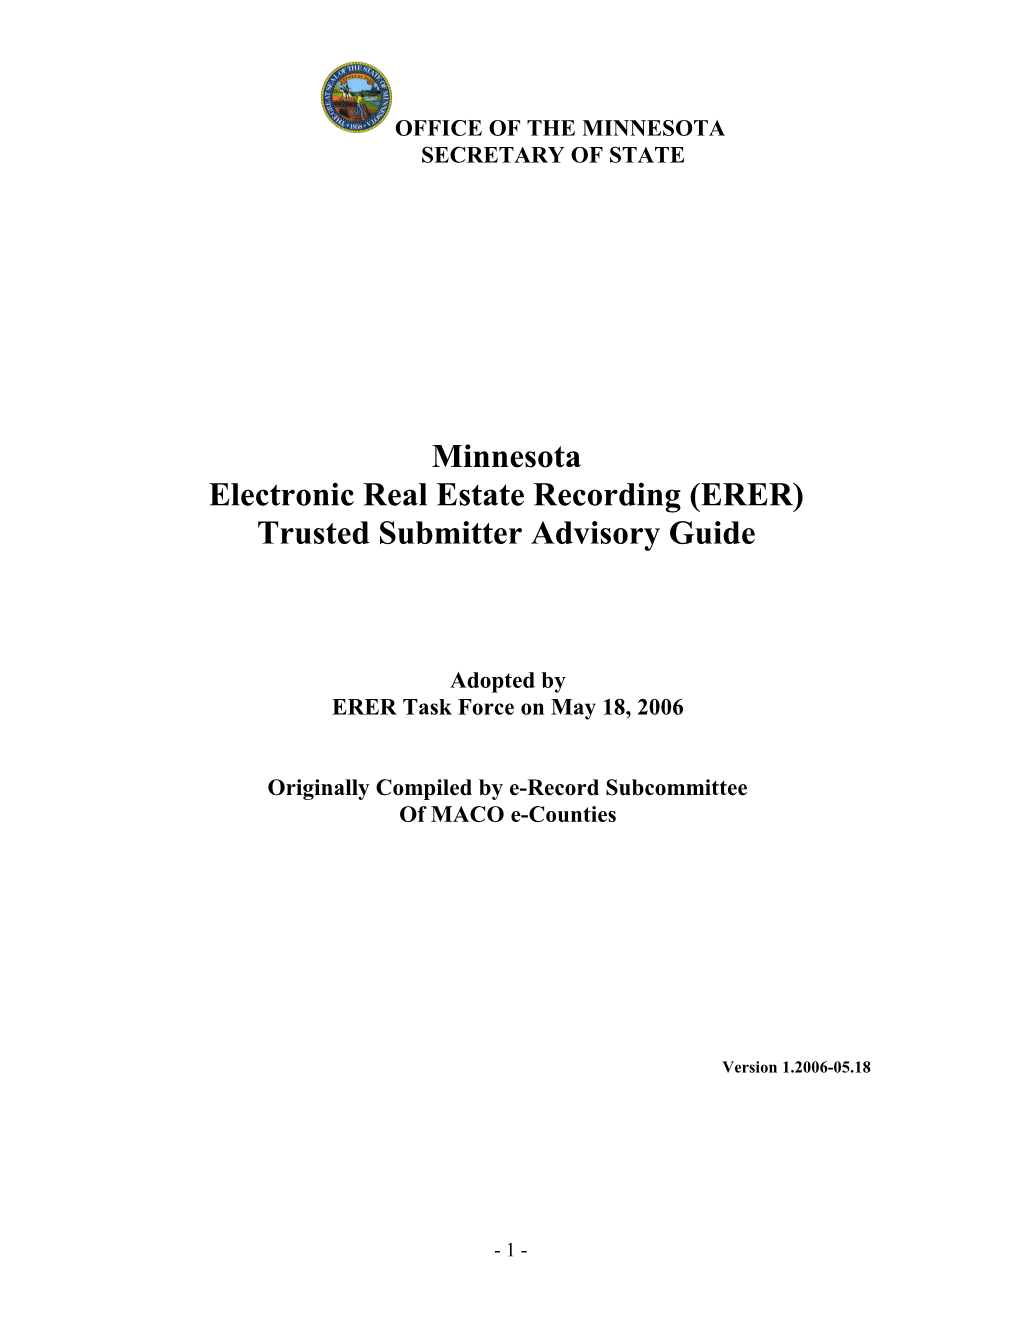 Electronic Real Estate Recording (ERER)